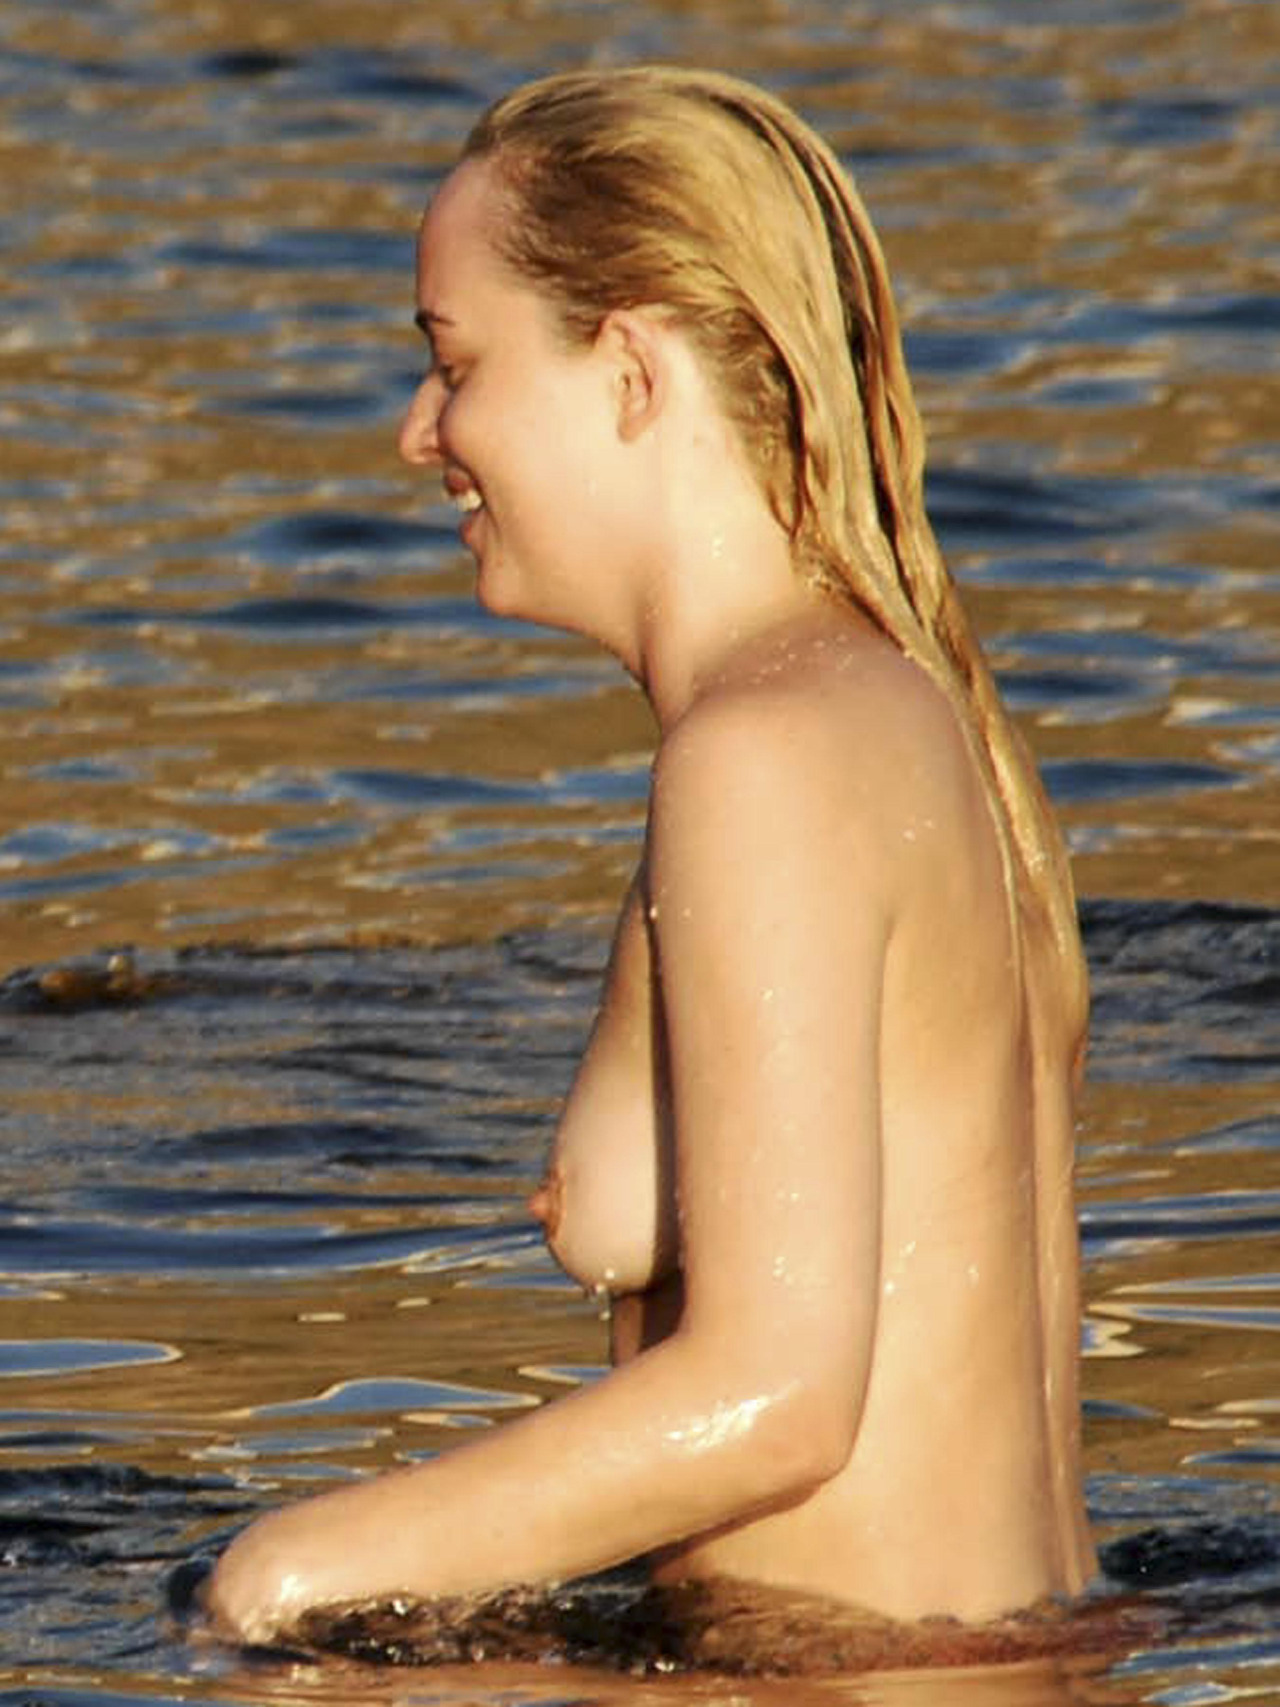 Dakota johnson topless pics